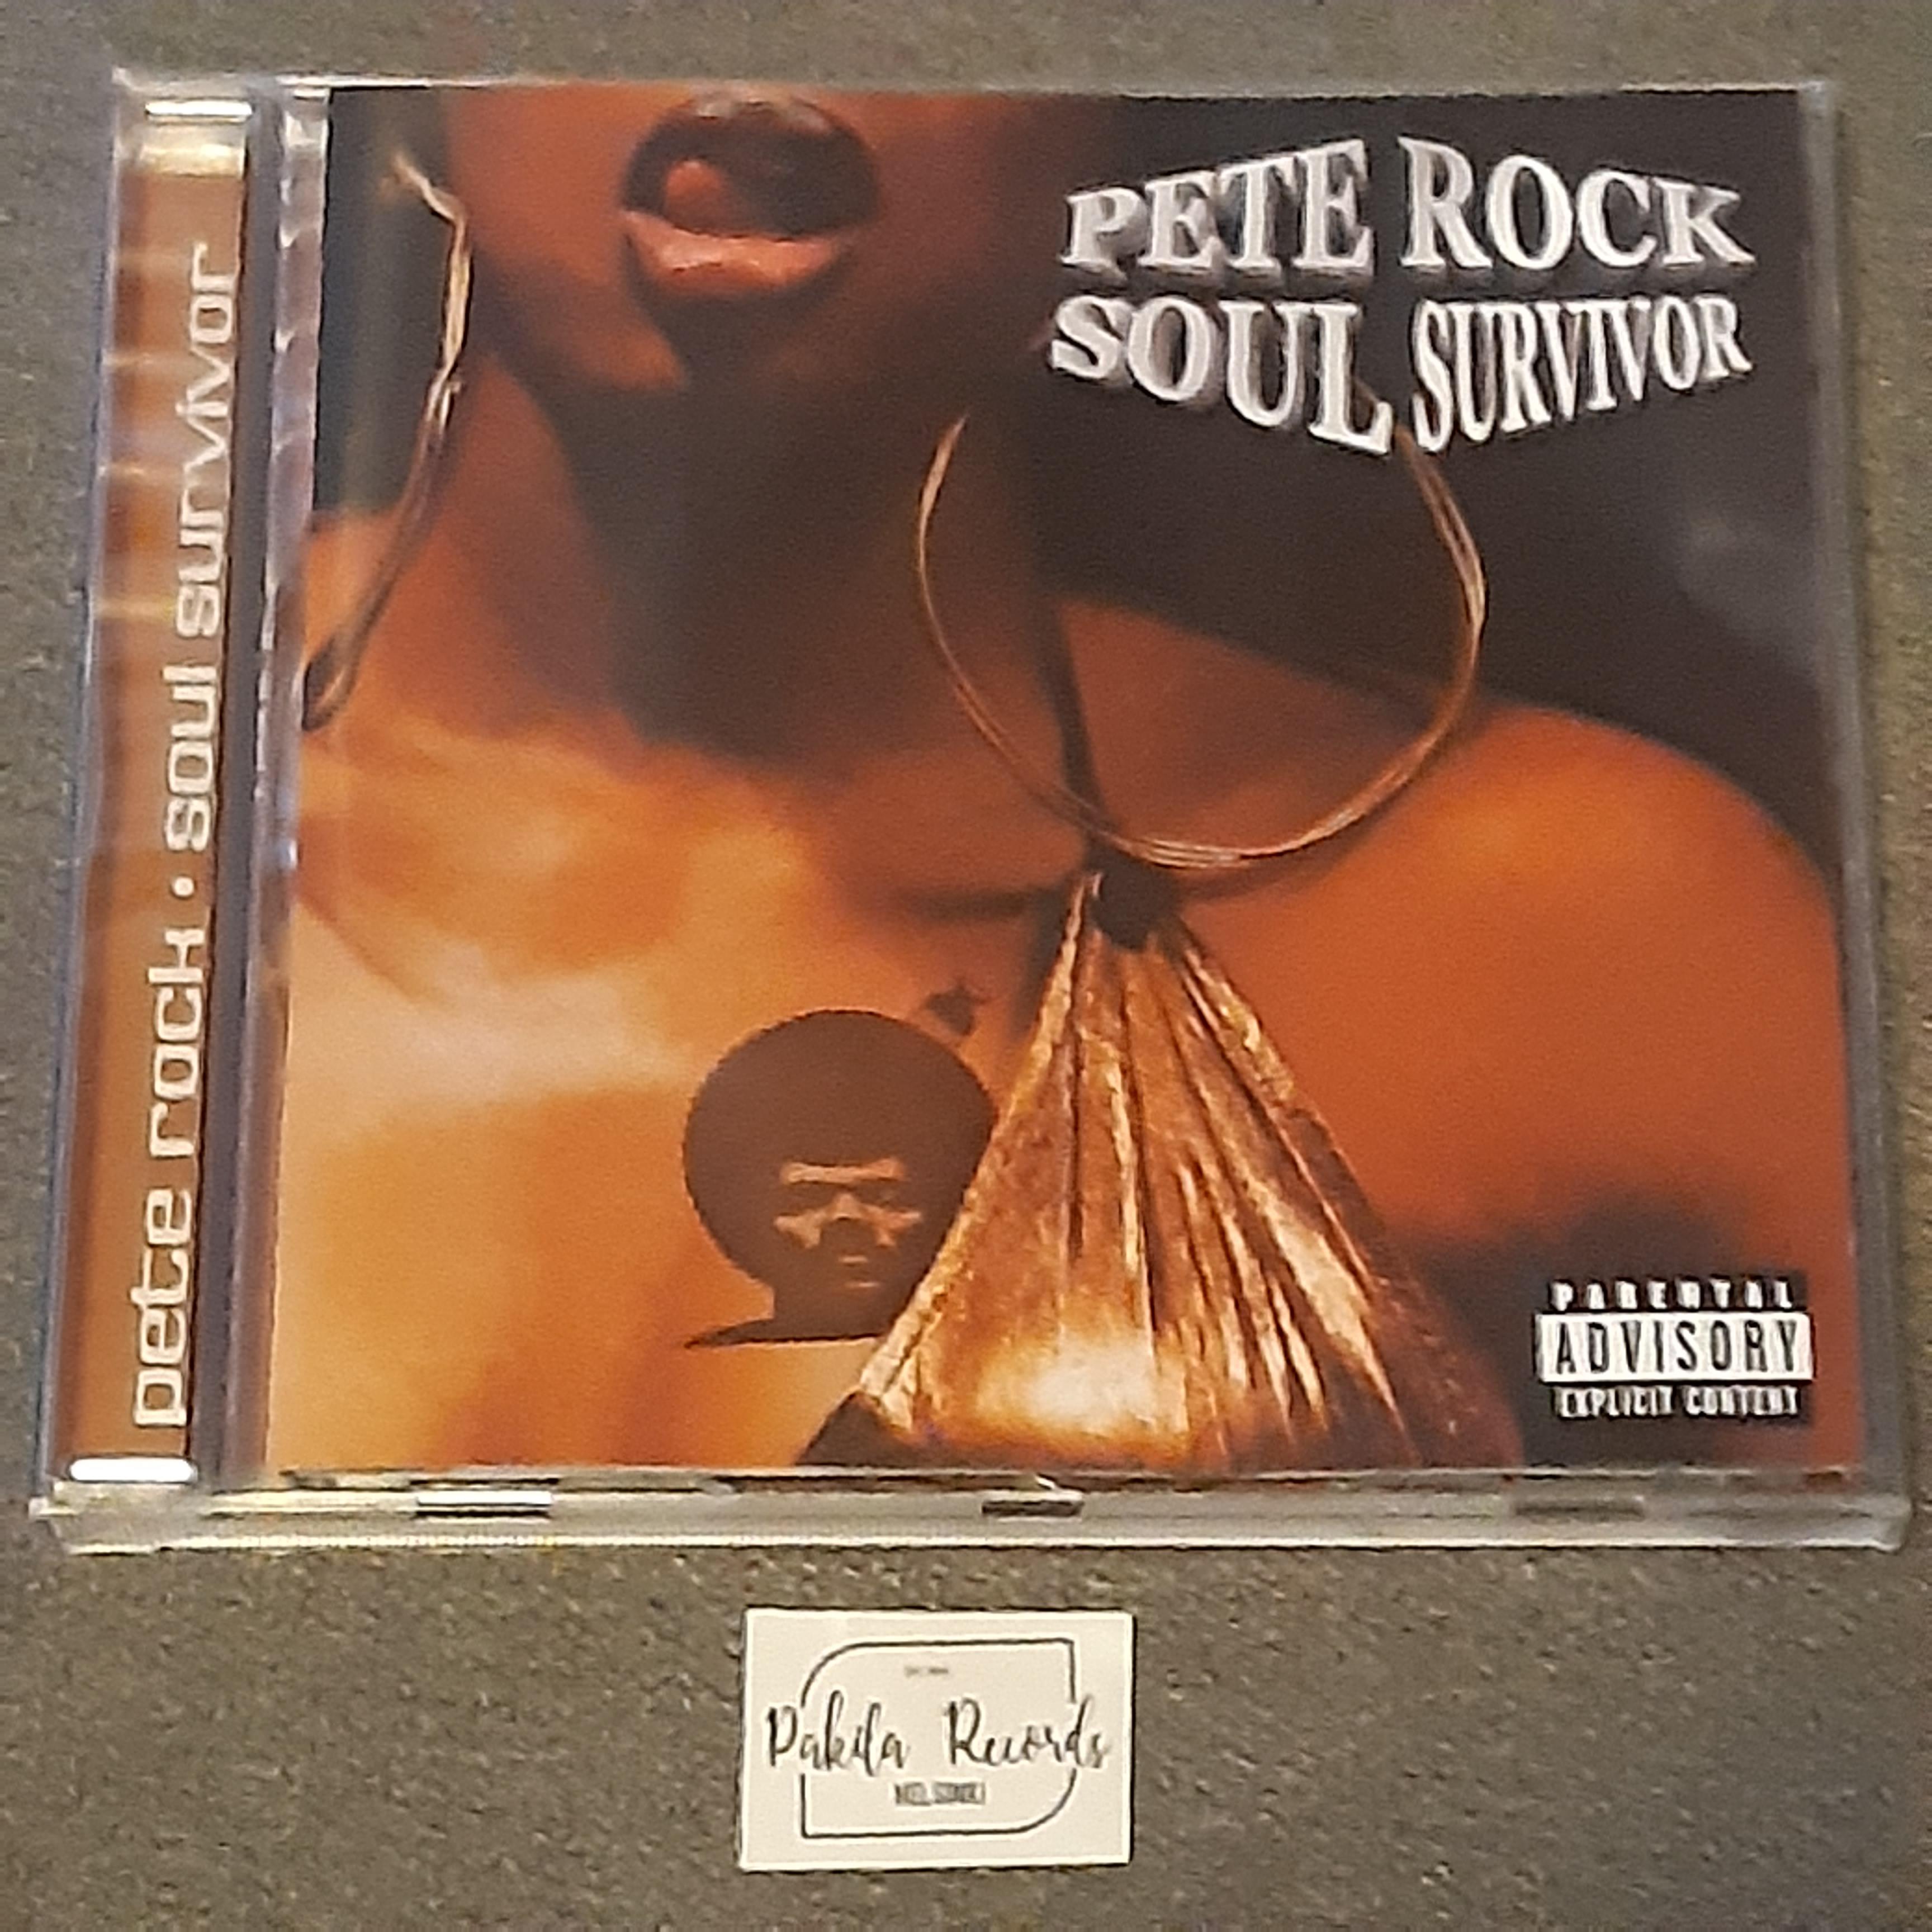 Pete Rock - Soul Survivor - CD (käytetty)